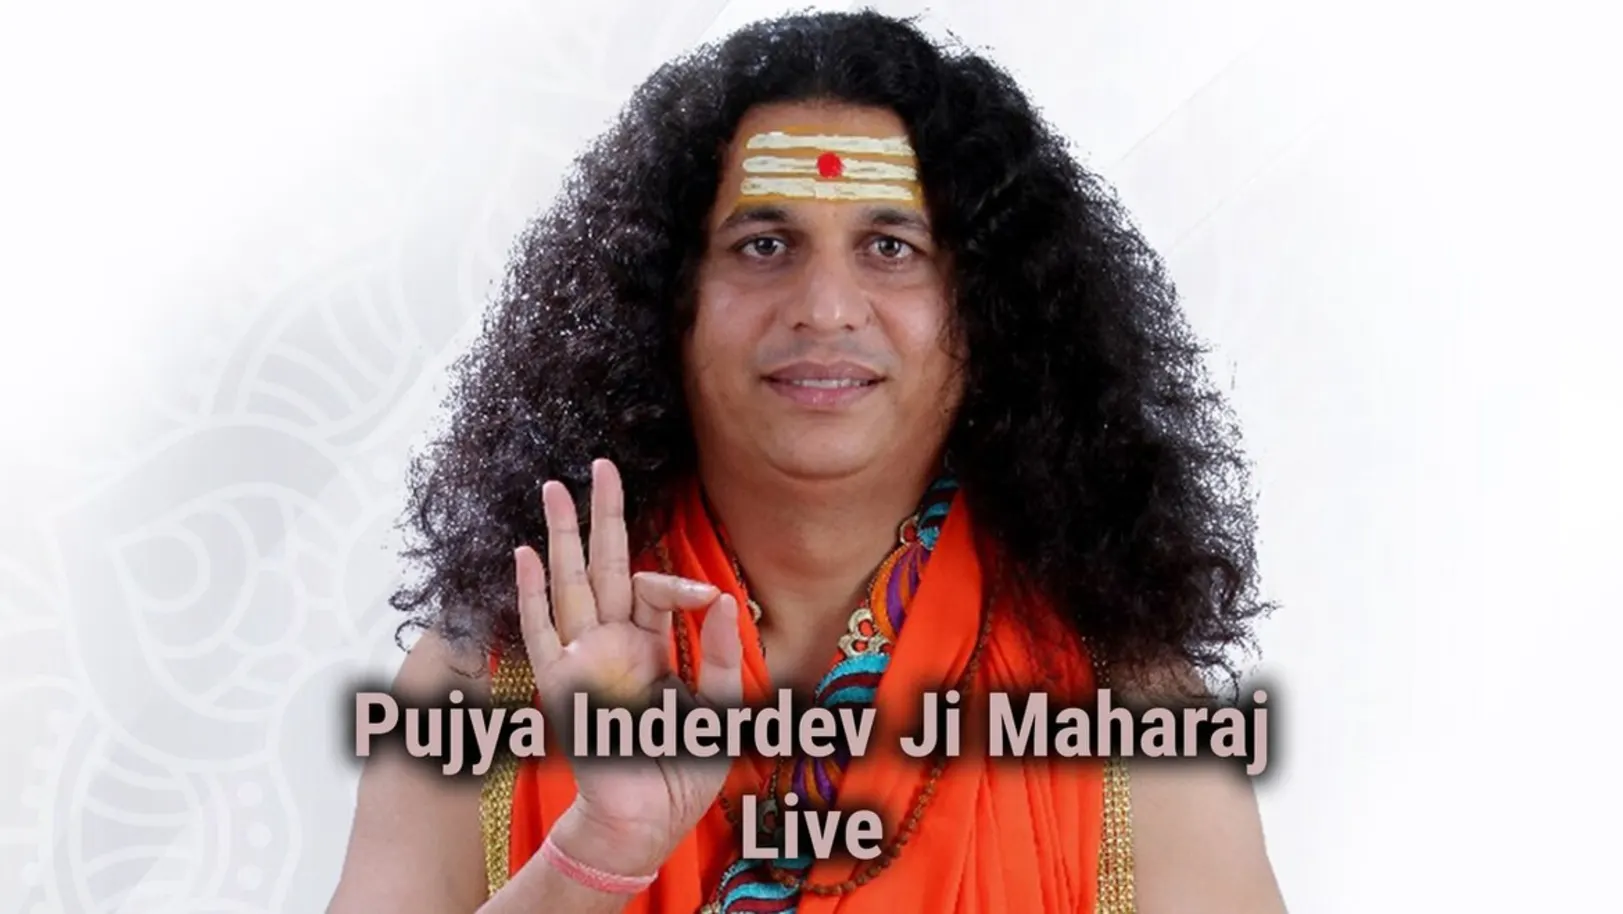 Pujya Inderdev Ji Maharaj Live Streaming Now On Sanskar TV